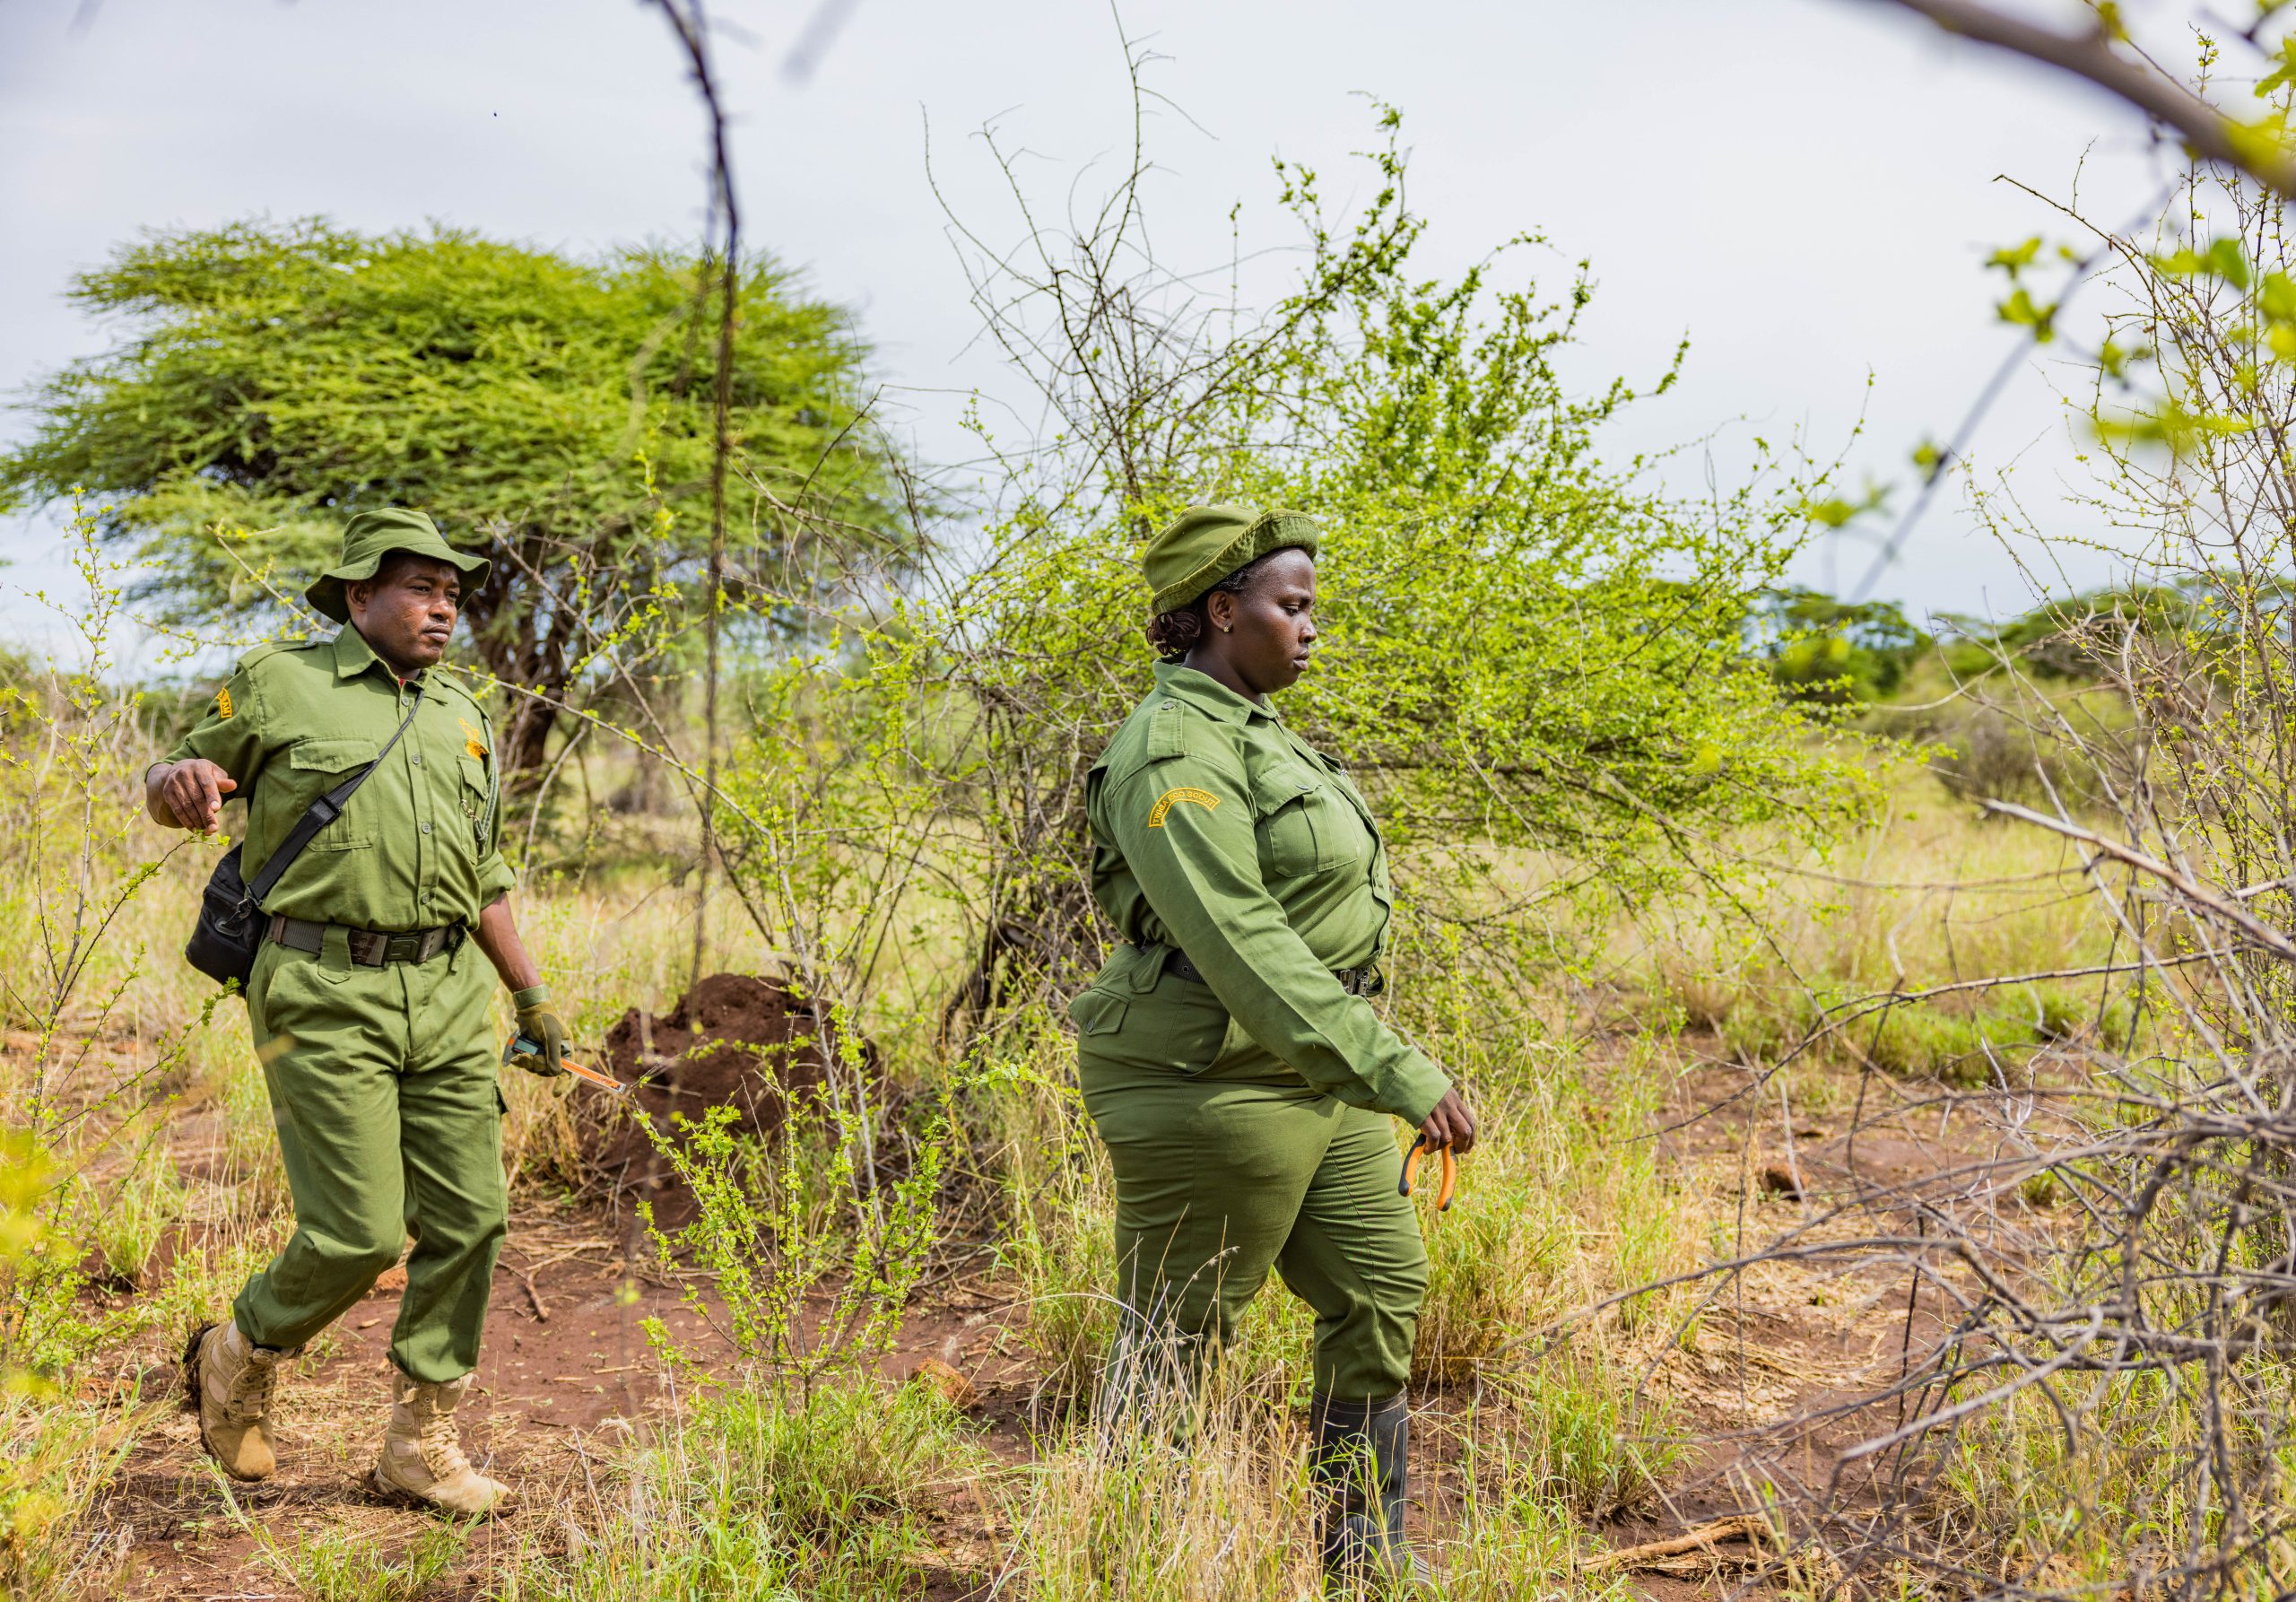 A group of rangers wearing green uniforms, walking through the bush